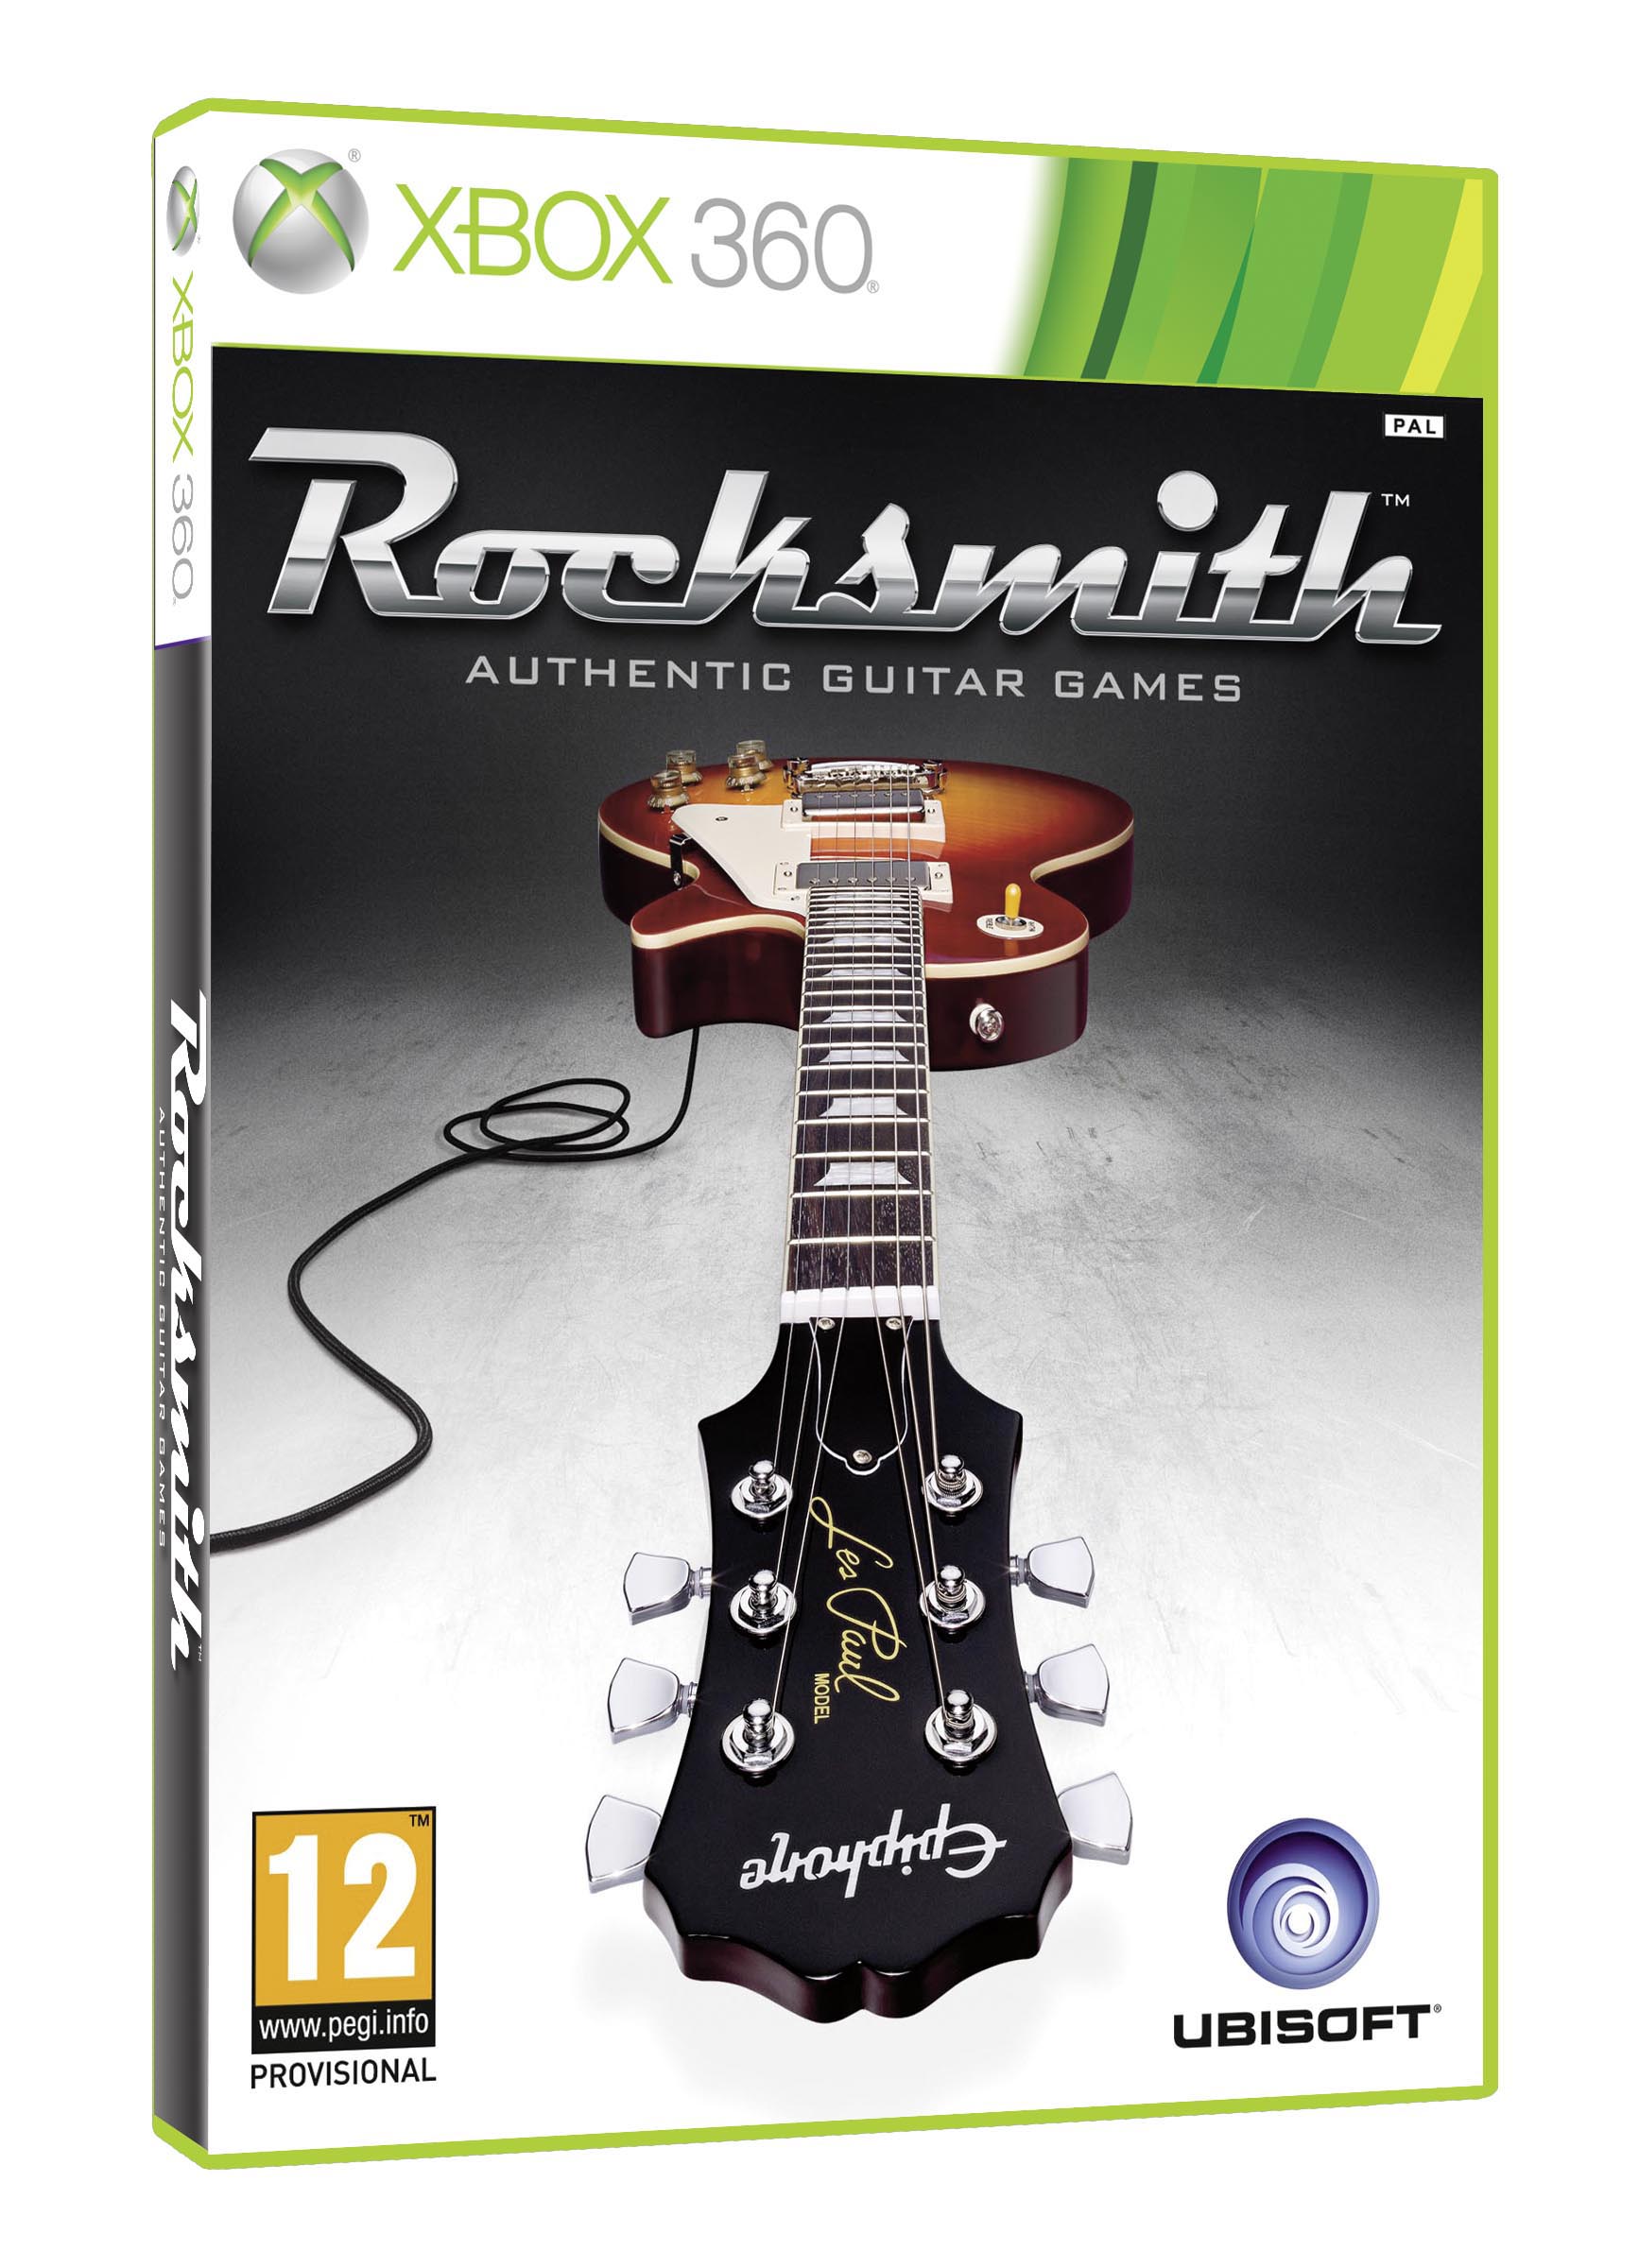 rocksmith 2014 pc download free